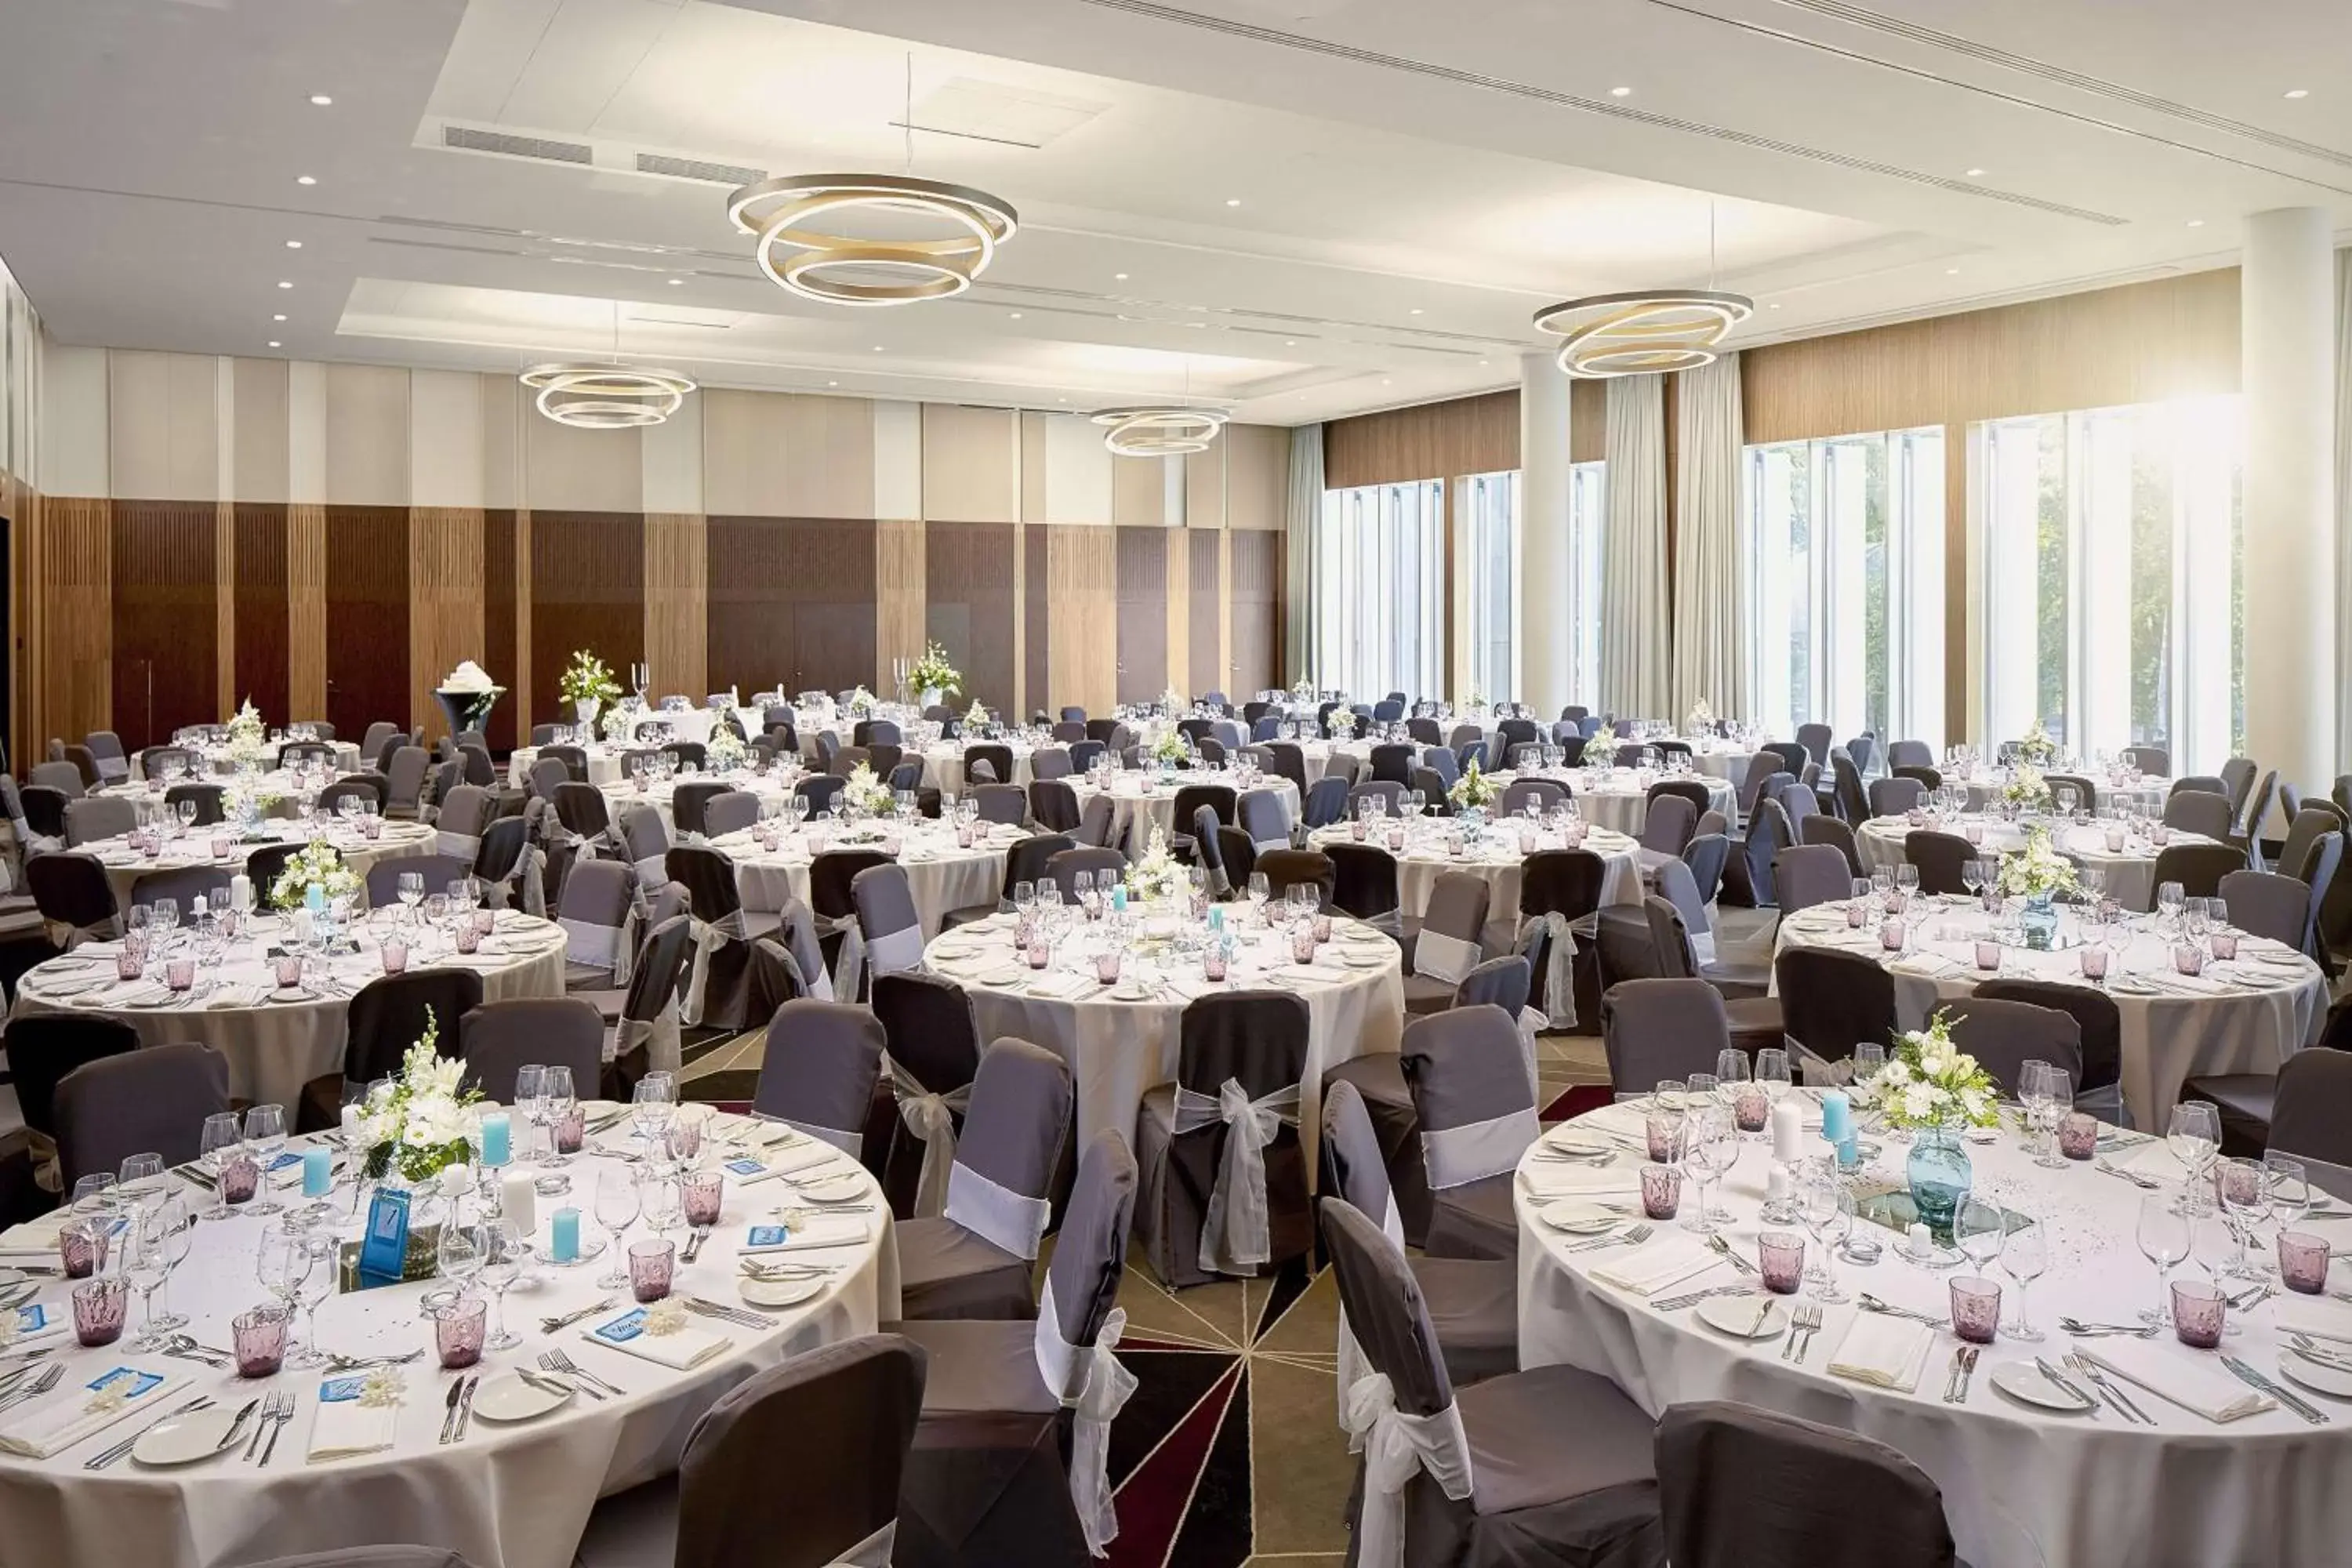 Meeting/conference room, Banquet Facilities in Hilton Tallinn Park